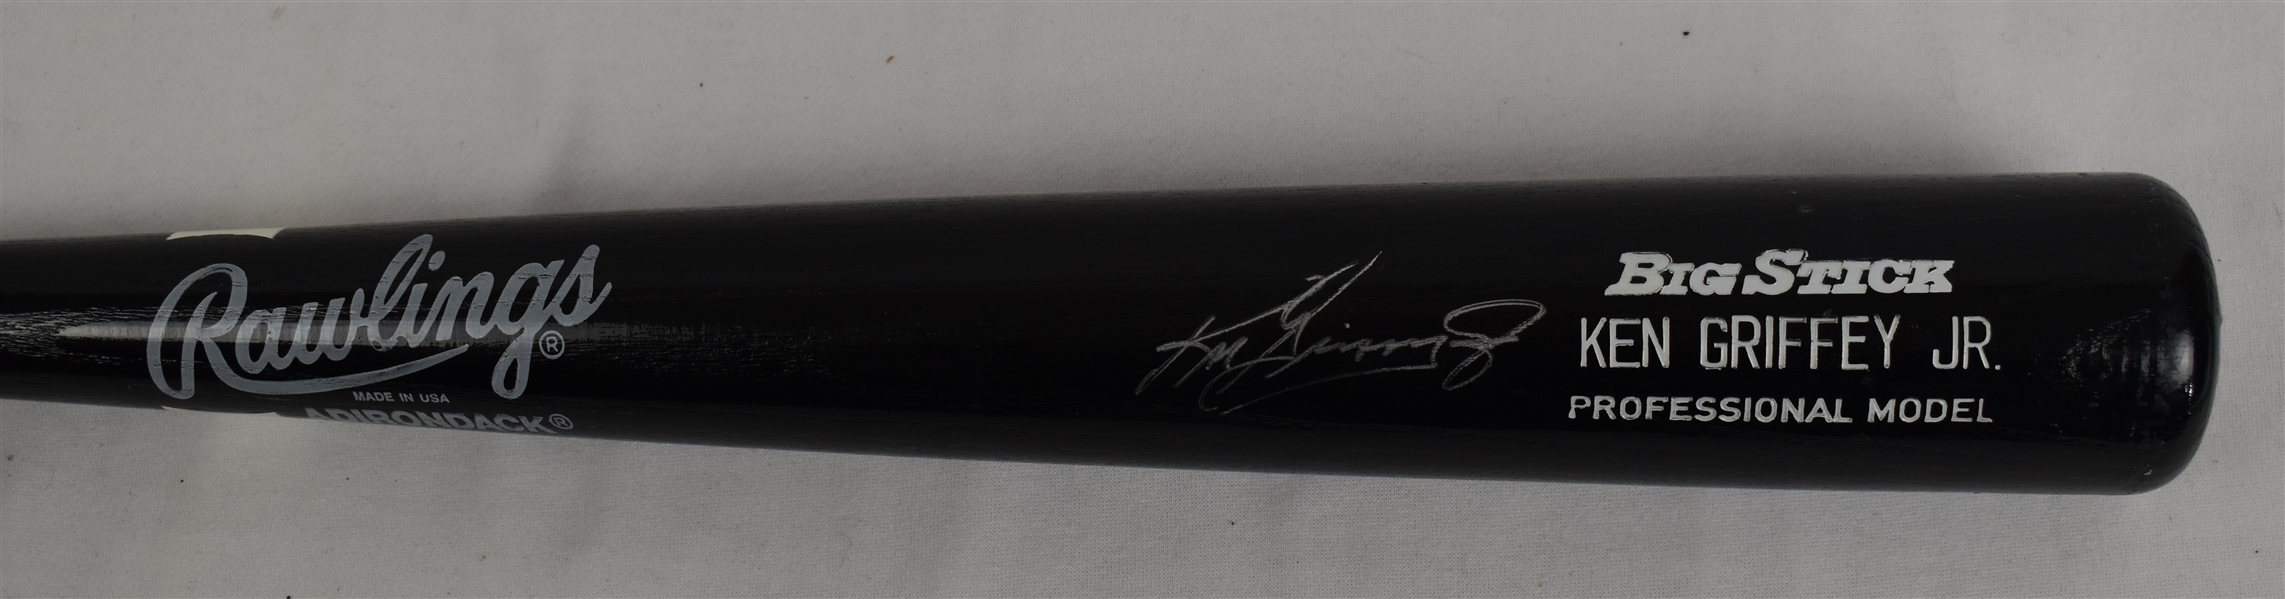 Ken Griffey Jr. Autographed Rawlings Big Stick Baseball Bat